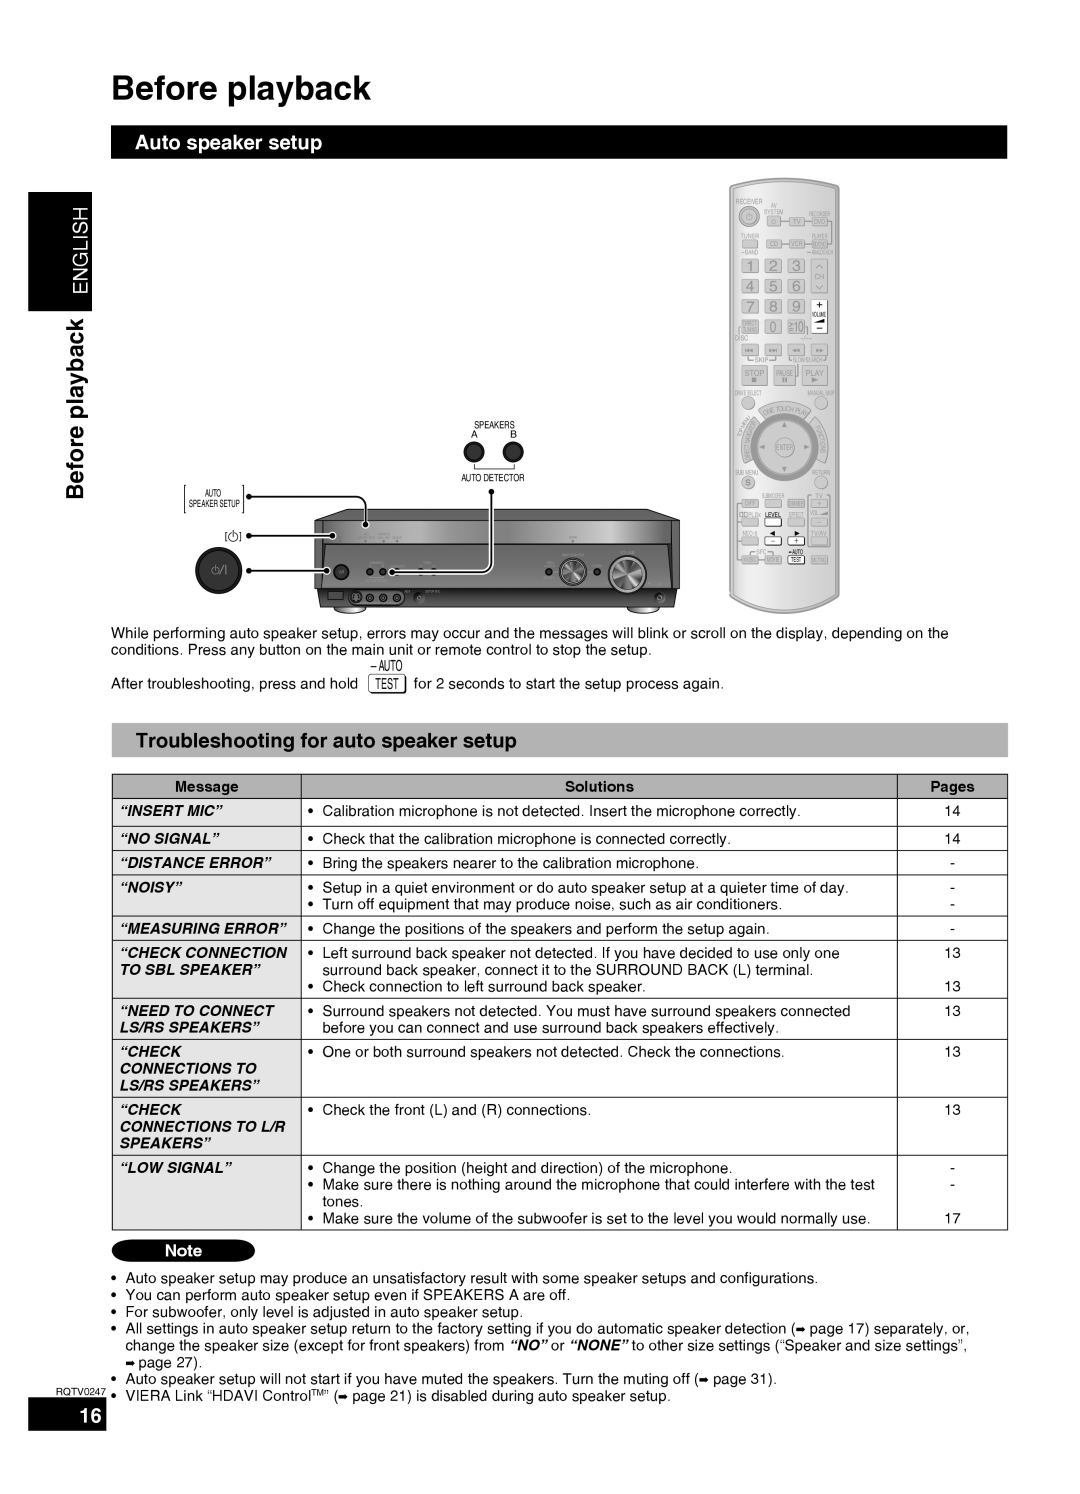 Panasonic SA-XR59 Troubleshooting for auto speaker setup, Before playback ENGLISH, Auto speaker setup, “Insert Mic” 